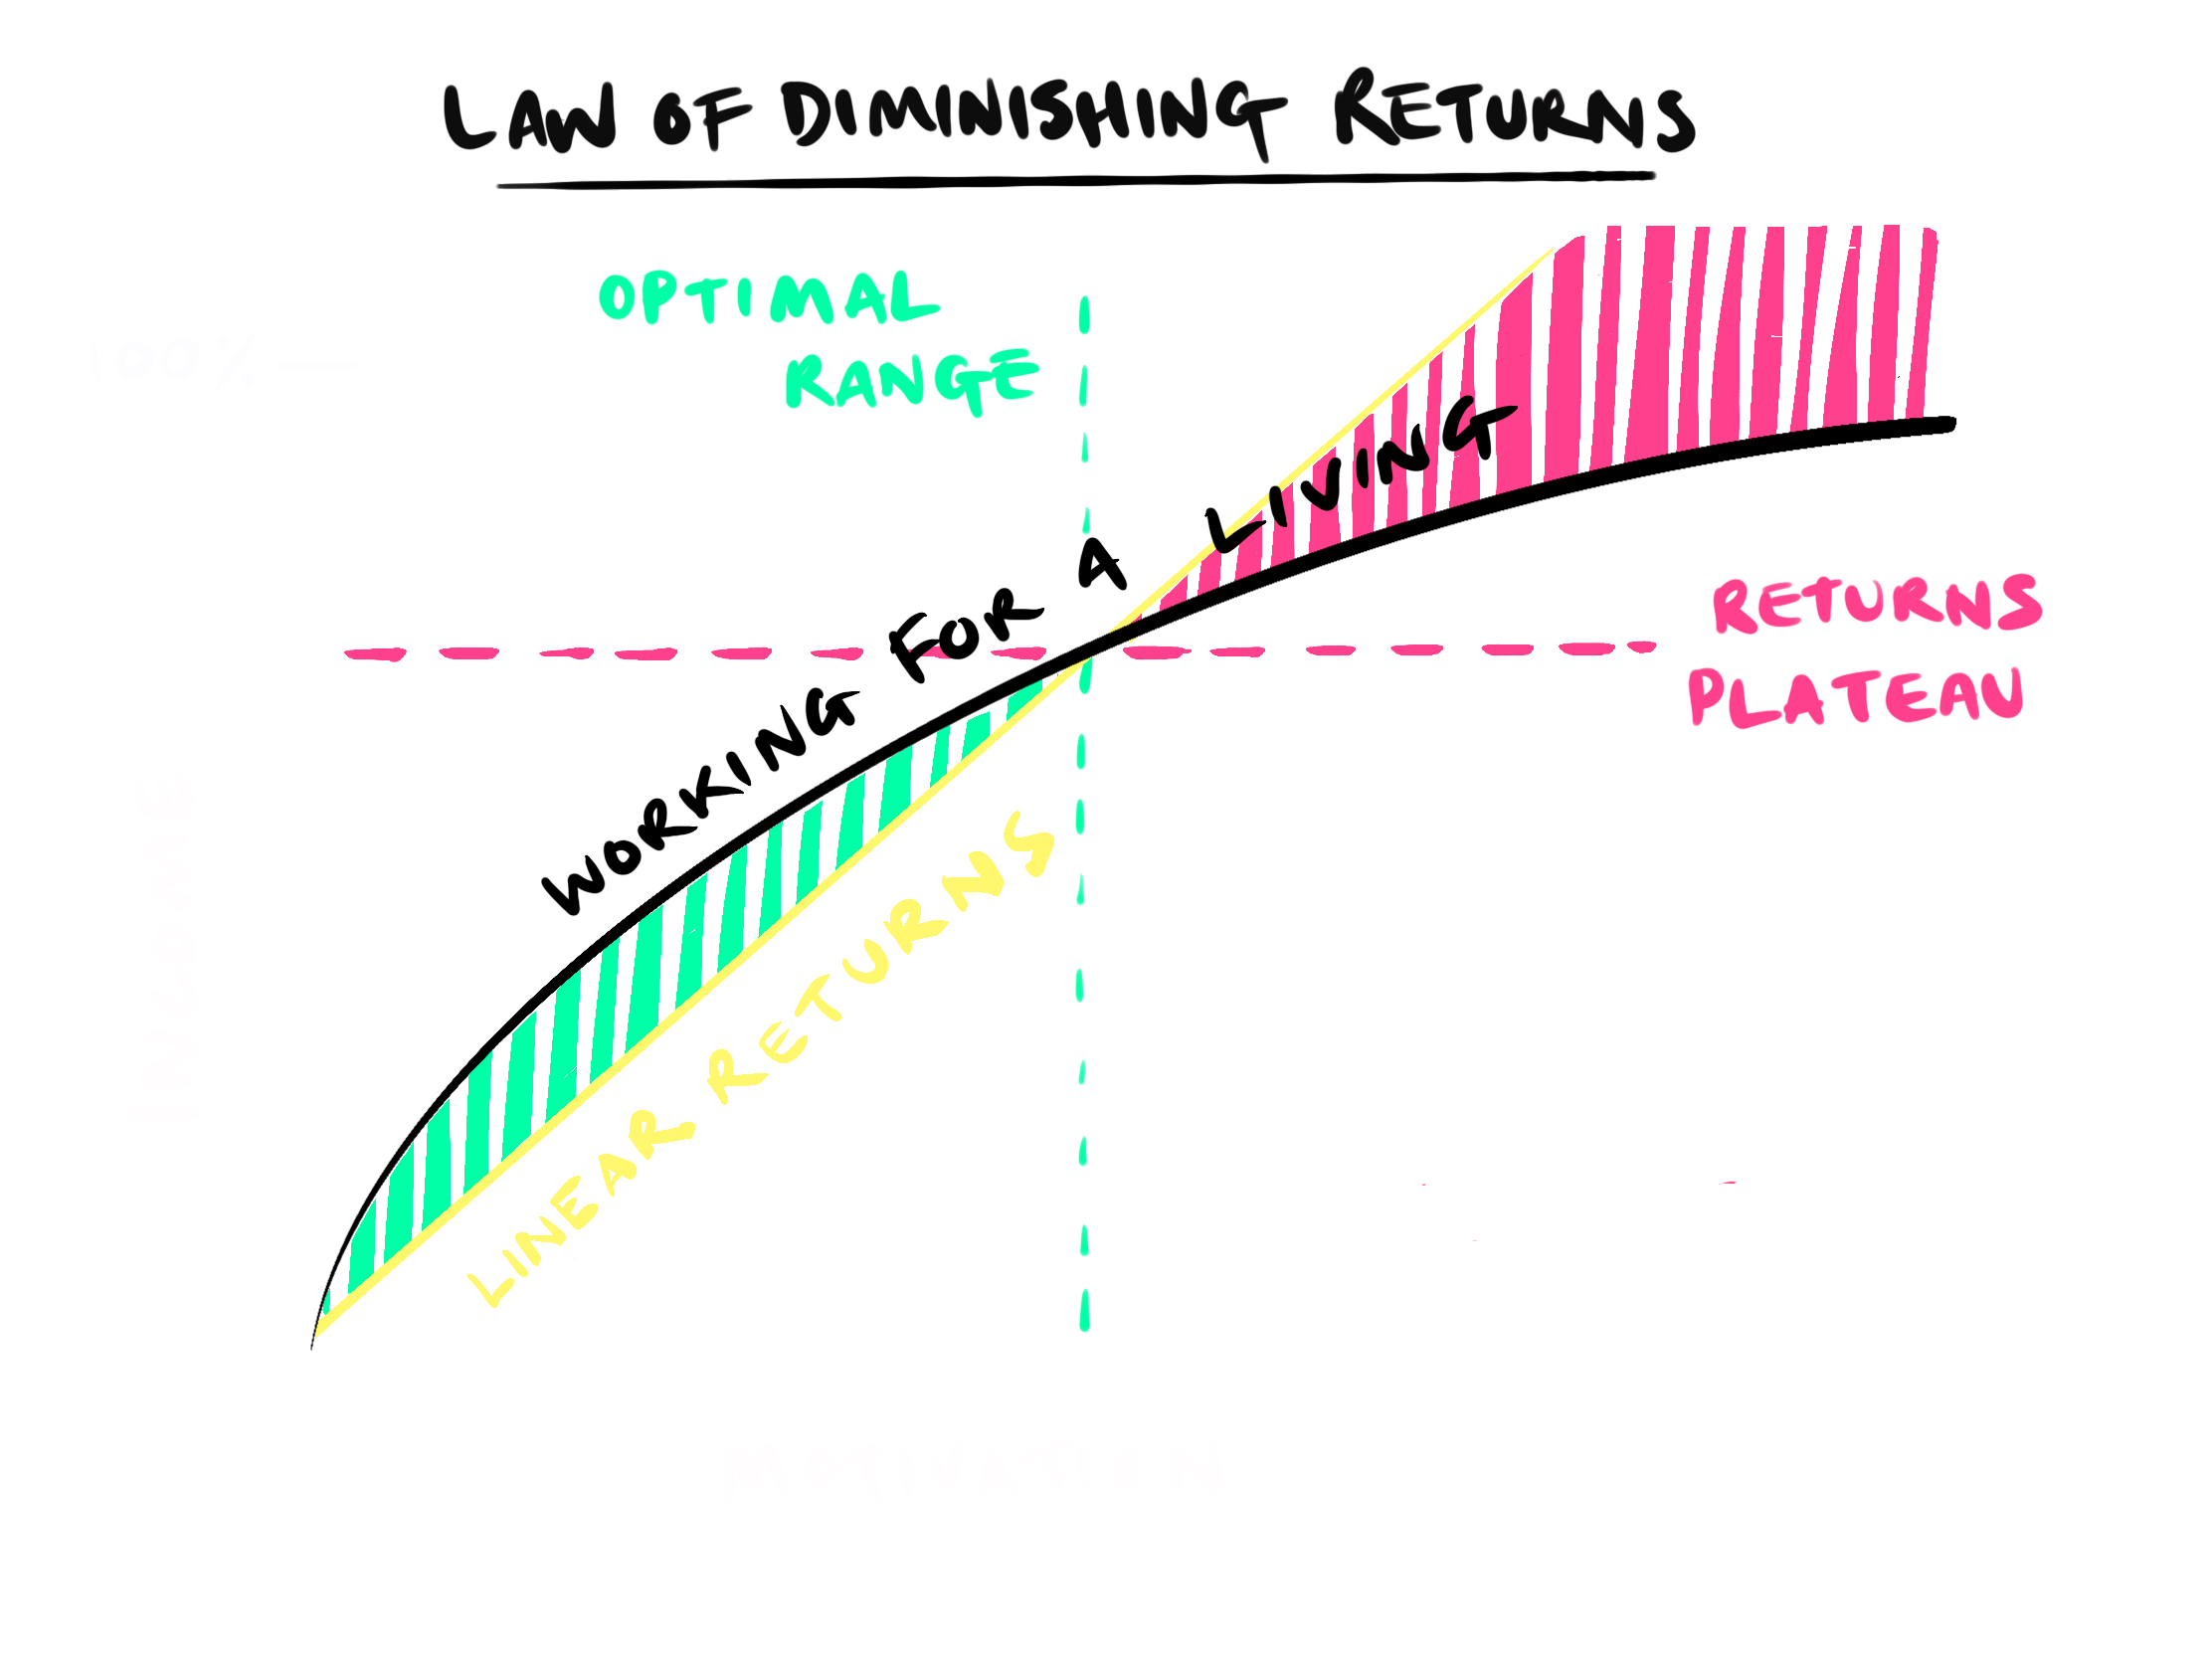 Diminishing returns graph - income vs motivation